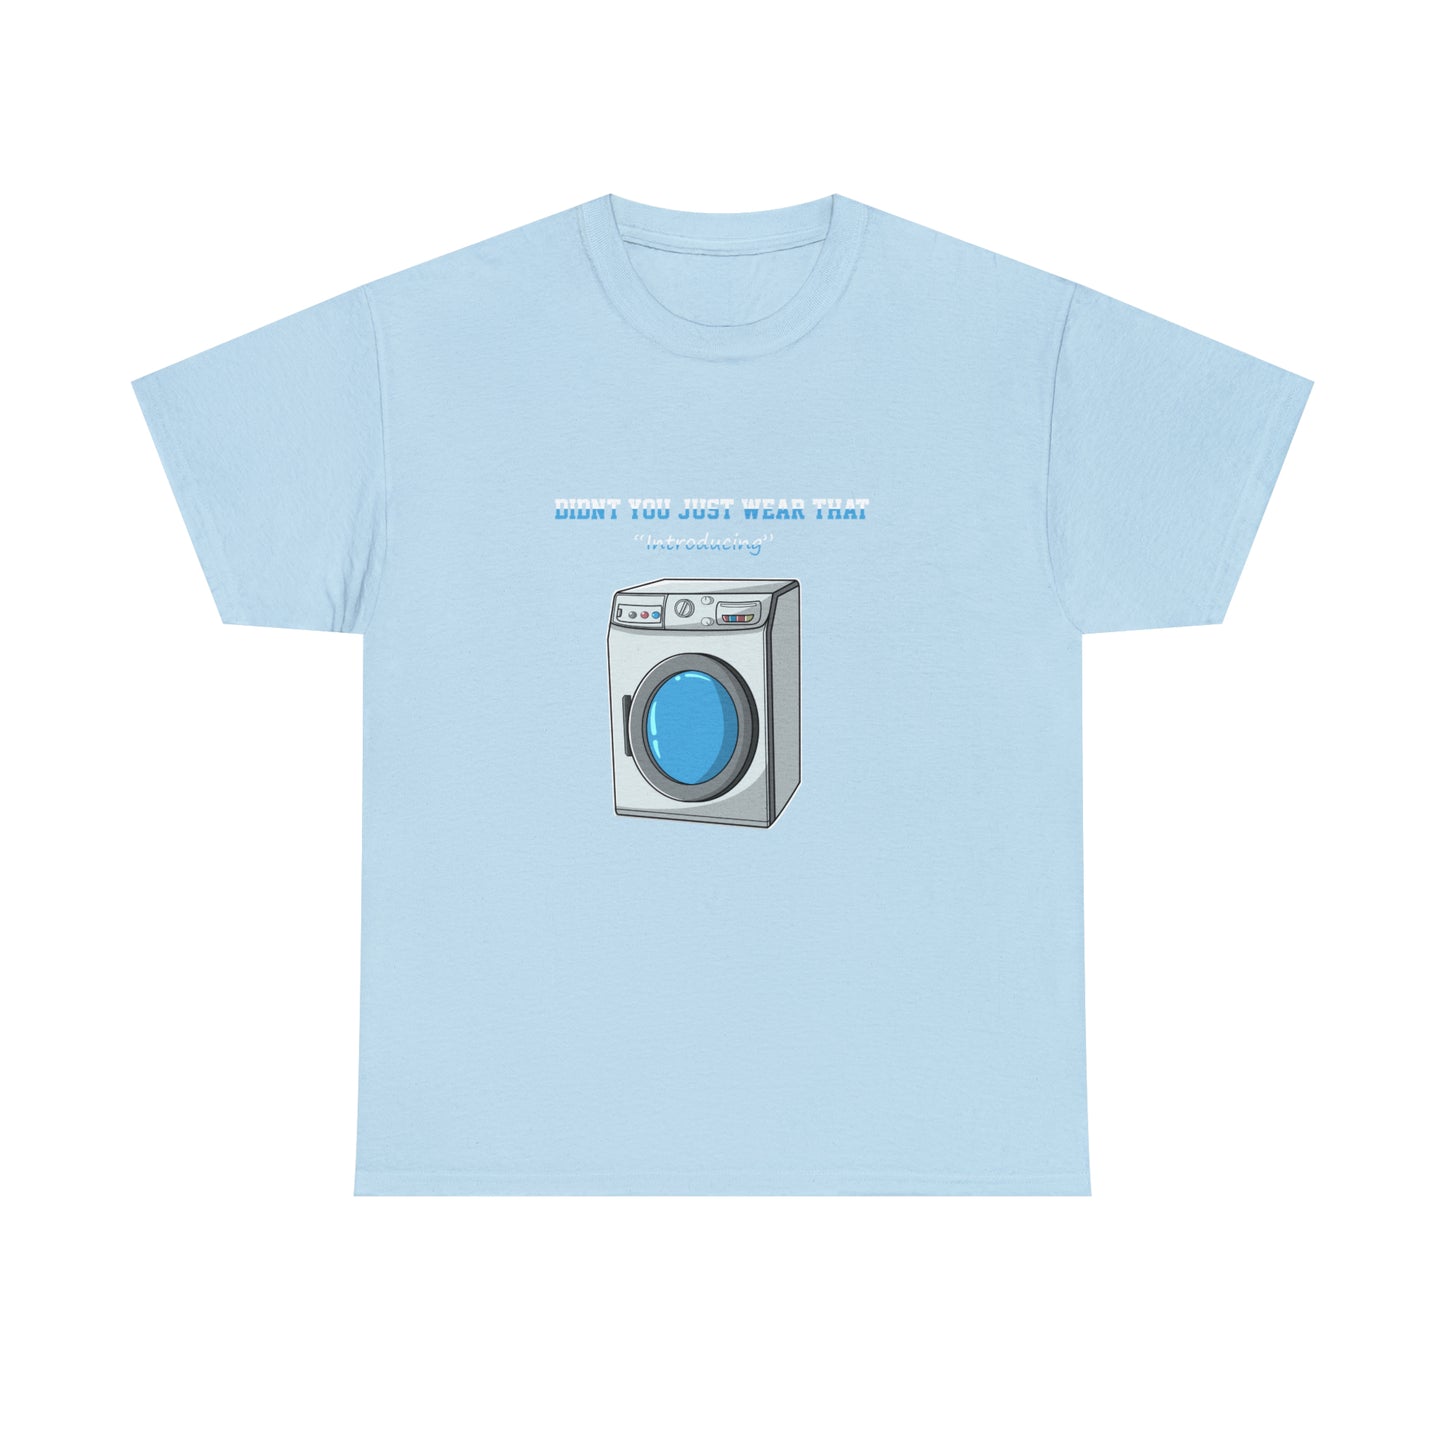 Custom Parody T-shirt, Didn't you just wear that? Washing Machine design